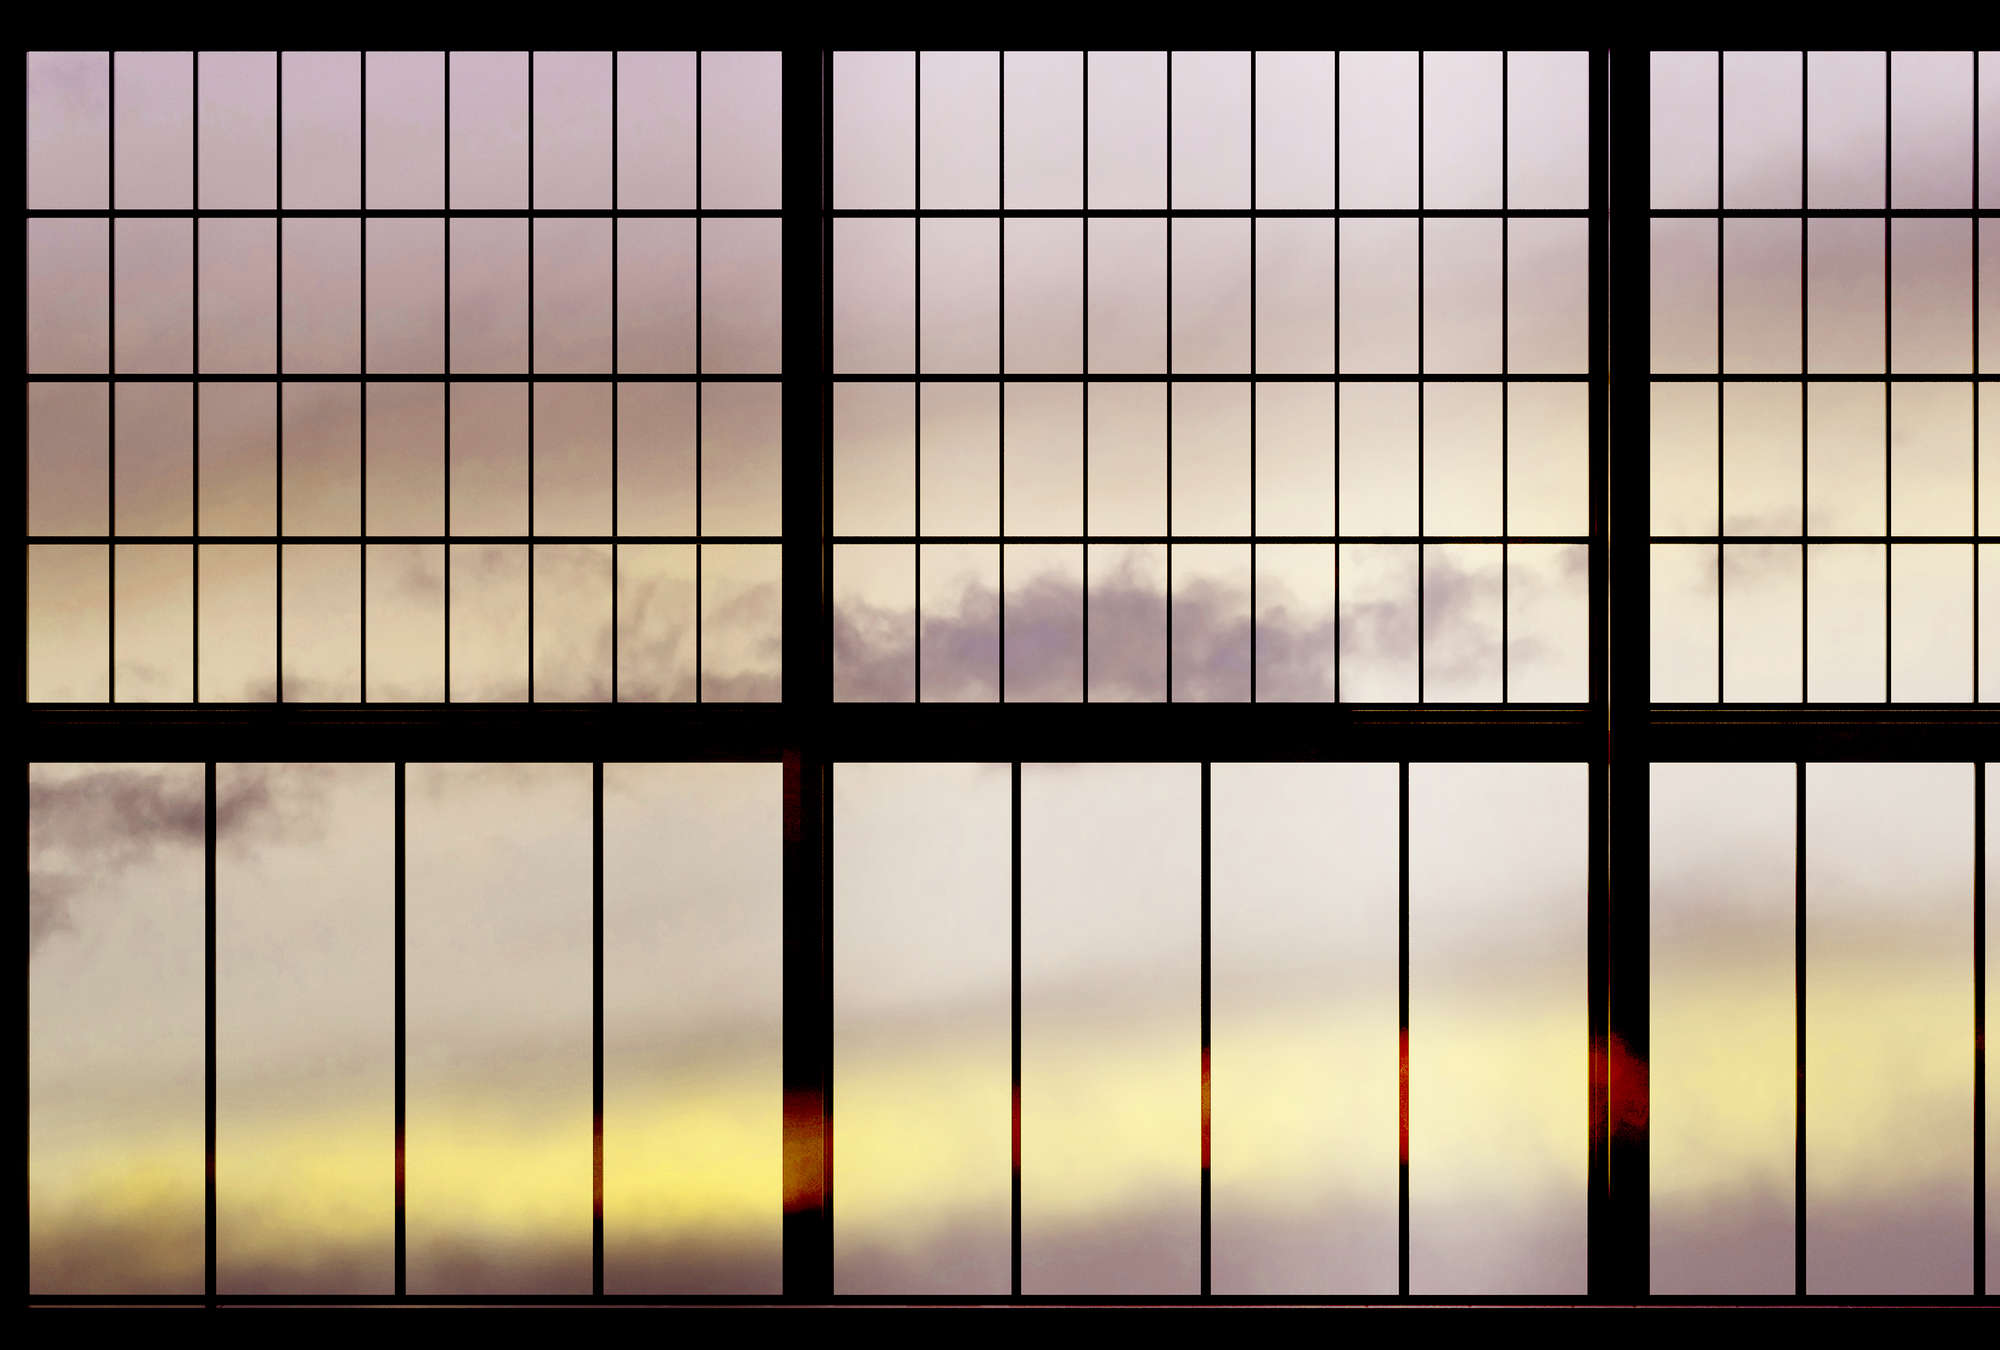             Sky 2 - Fototapete Fenster Ausblick Sonnenaufgang – Gelb, Schwarz | Mattes Glattvlies
        